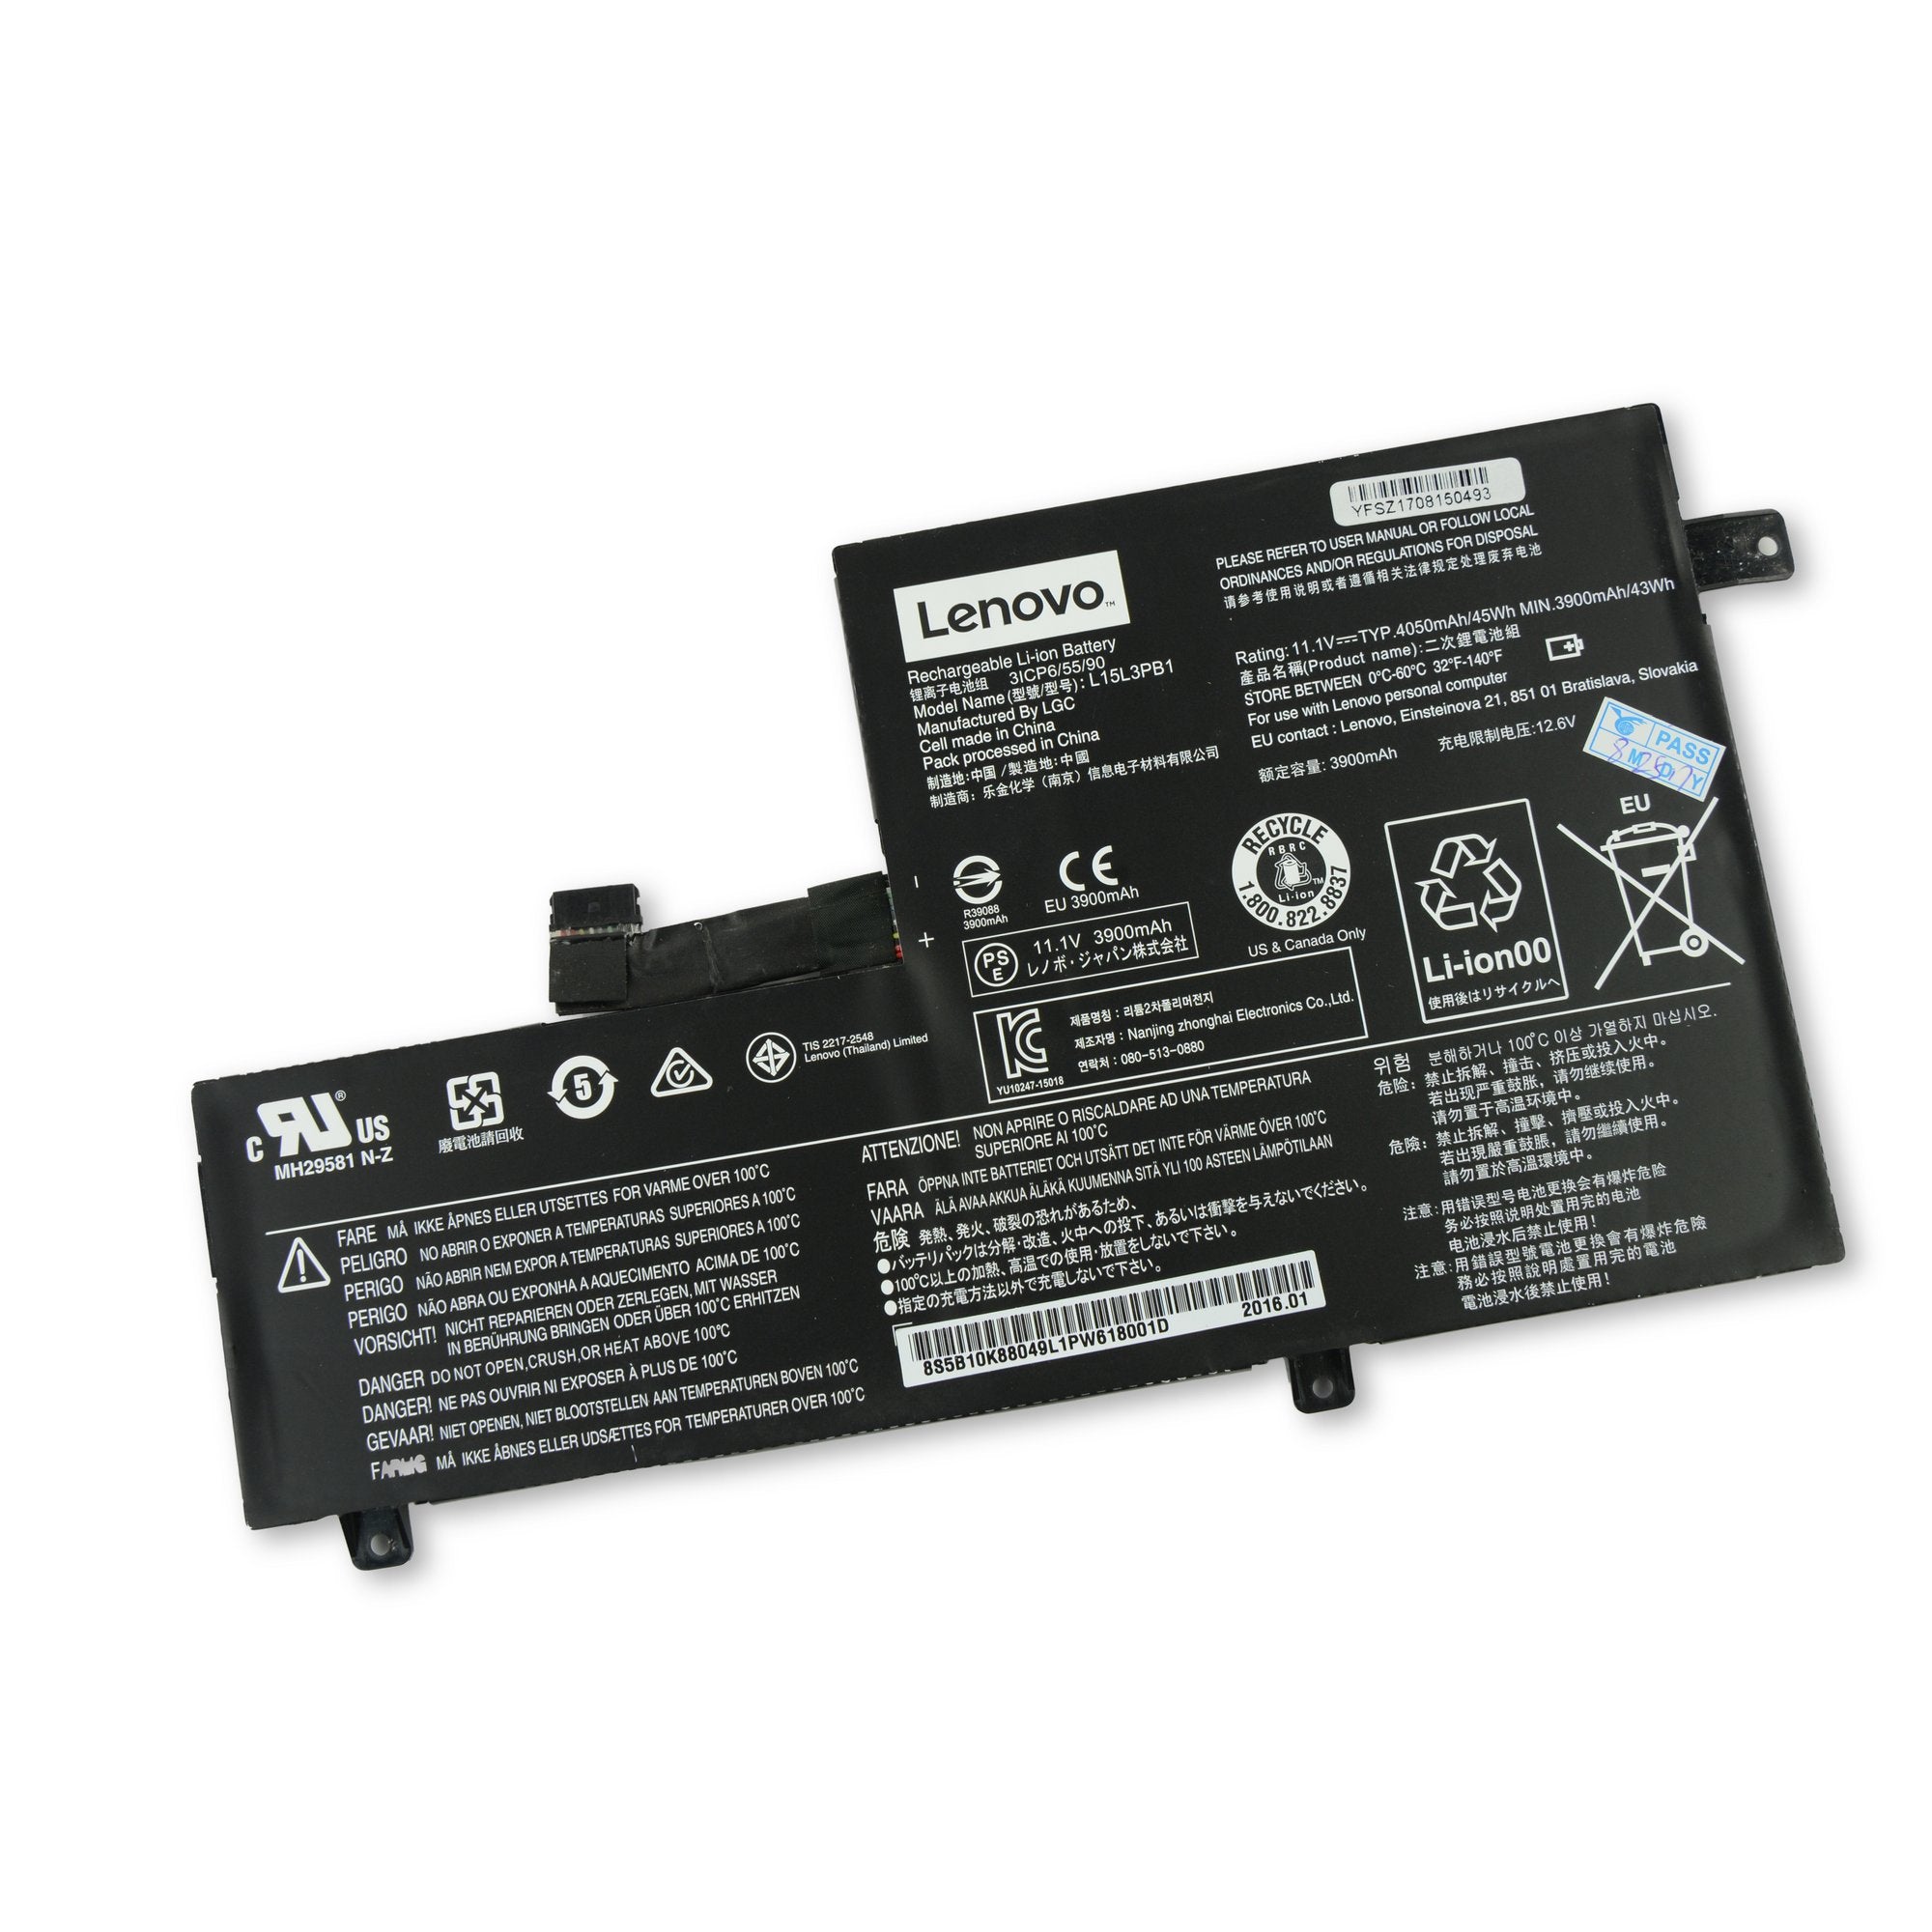 Lenovo N22 and N23 Chromebook Battery